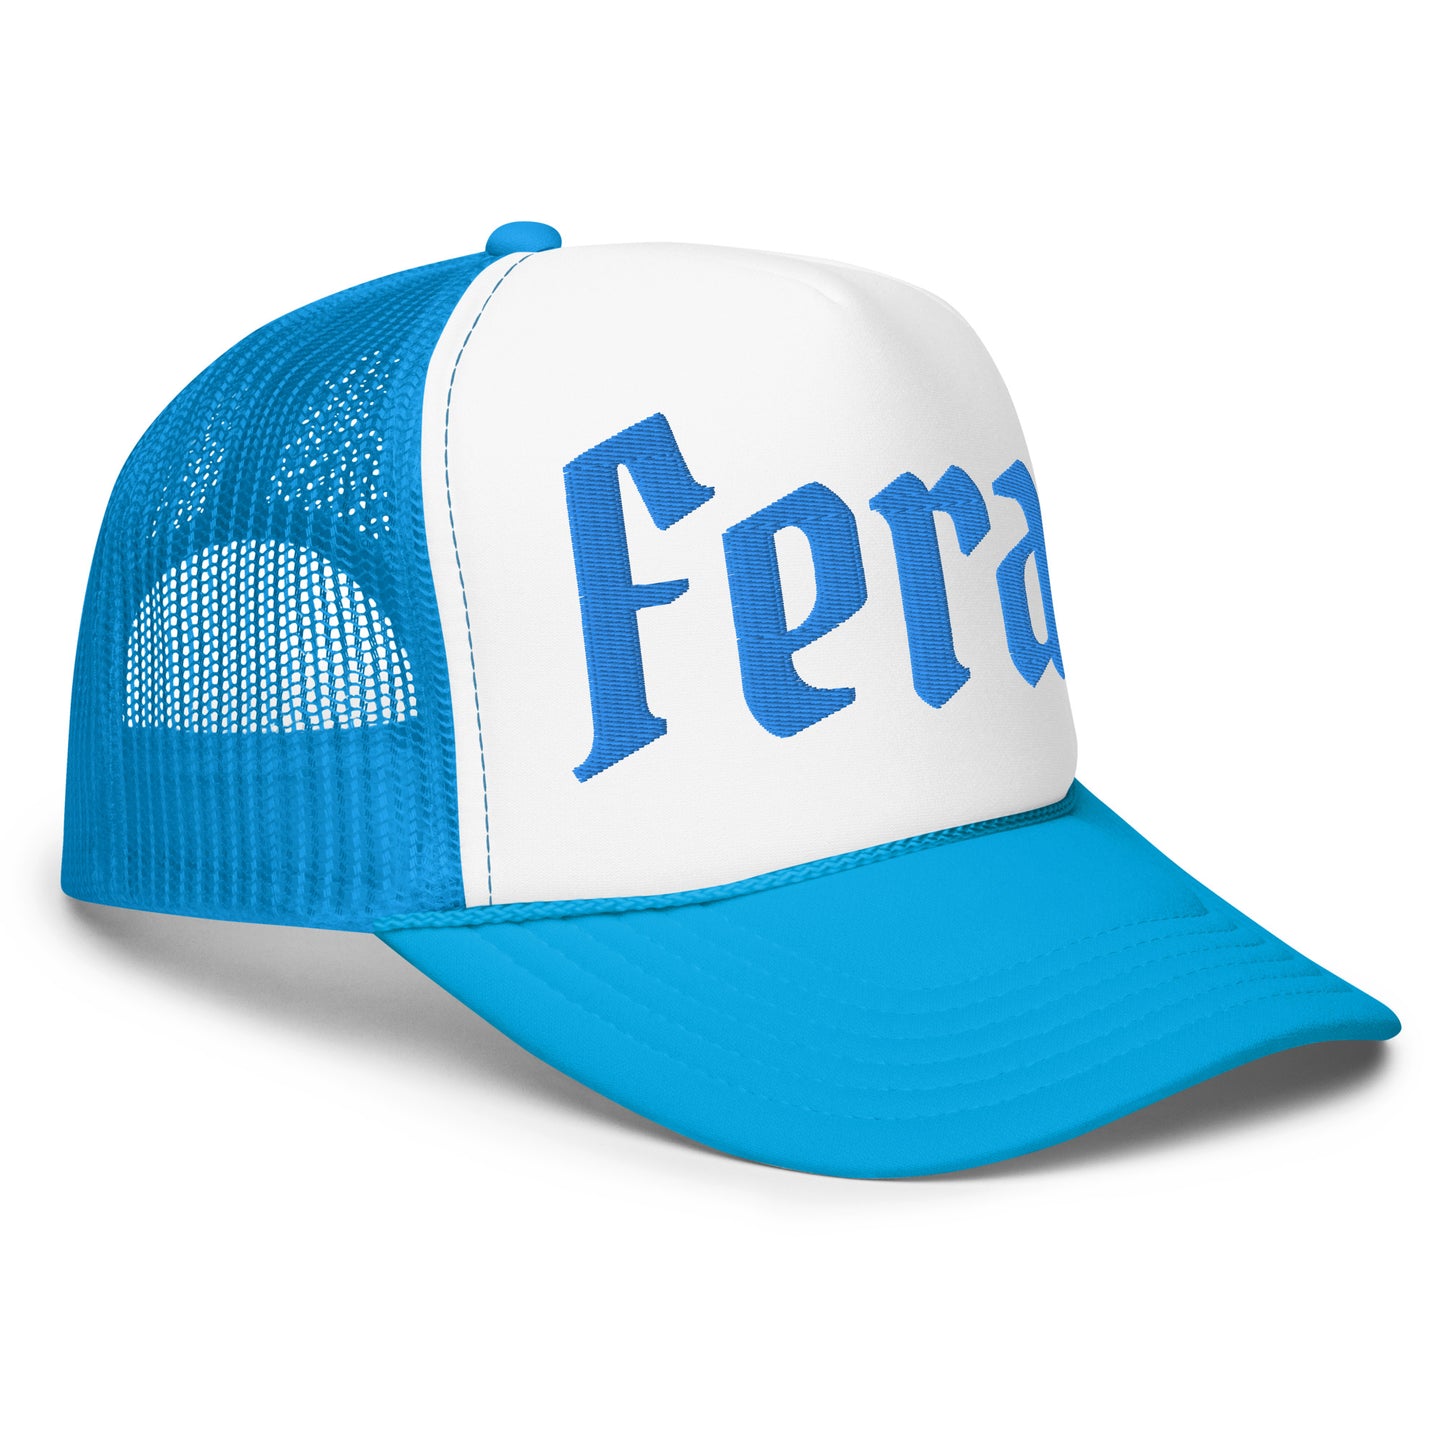 Feral Blue Embroidered Unisex Foam trucker hat